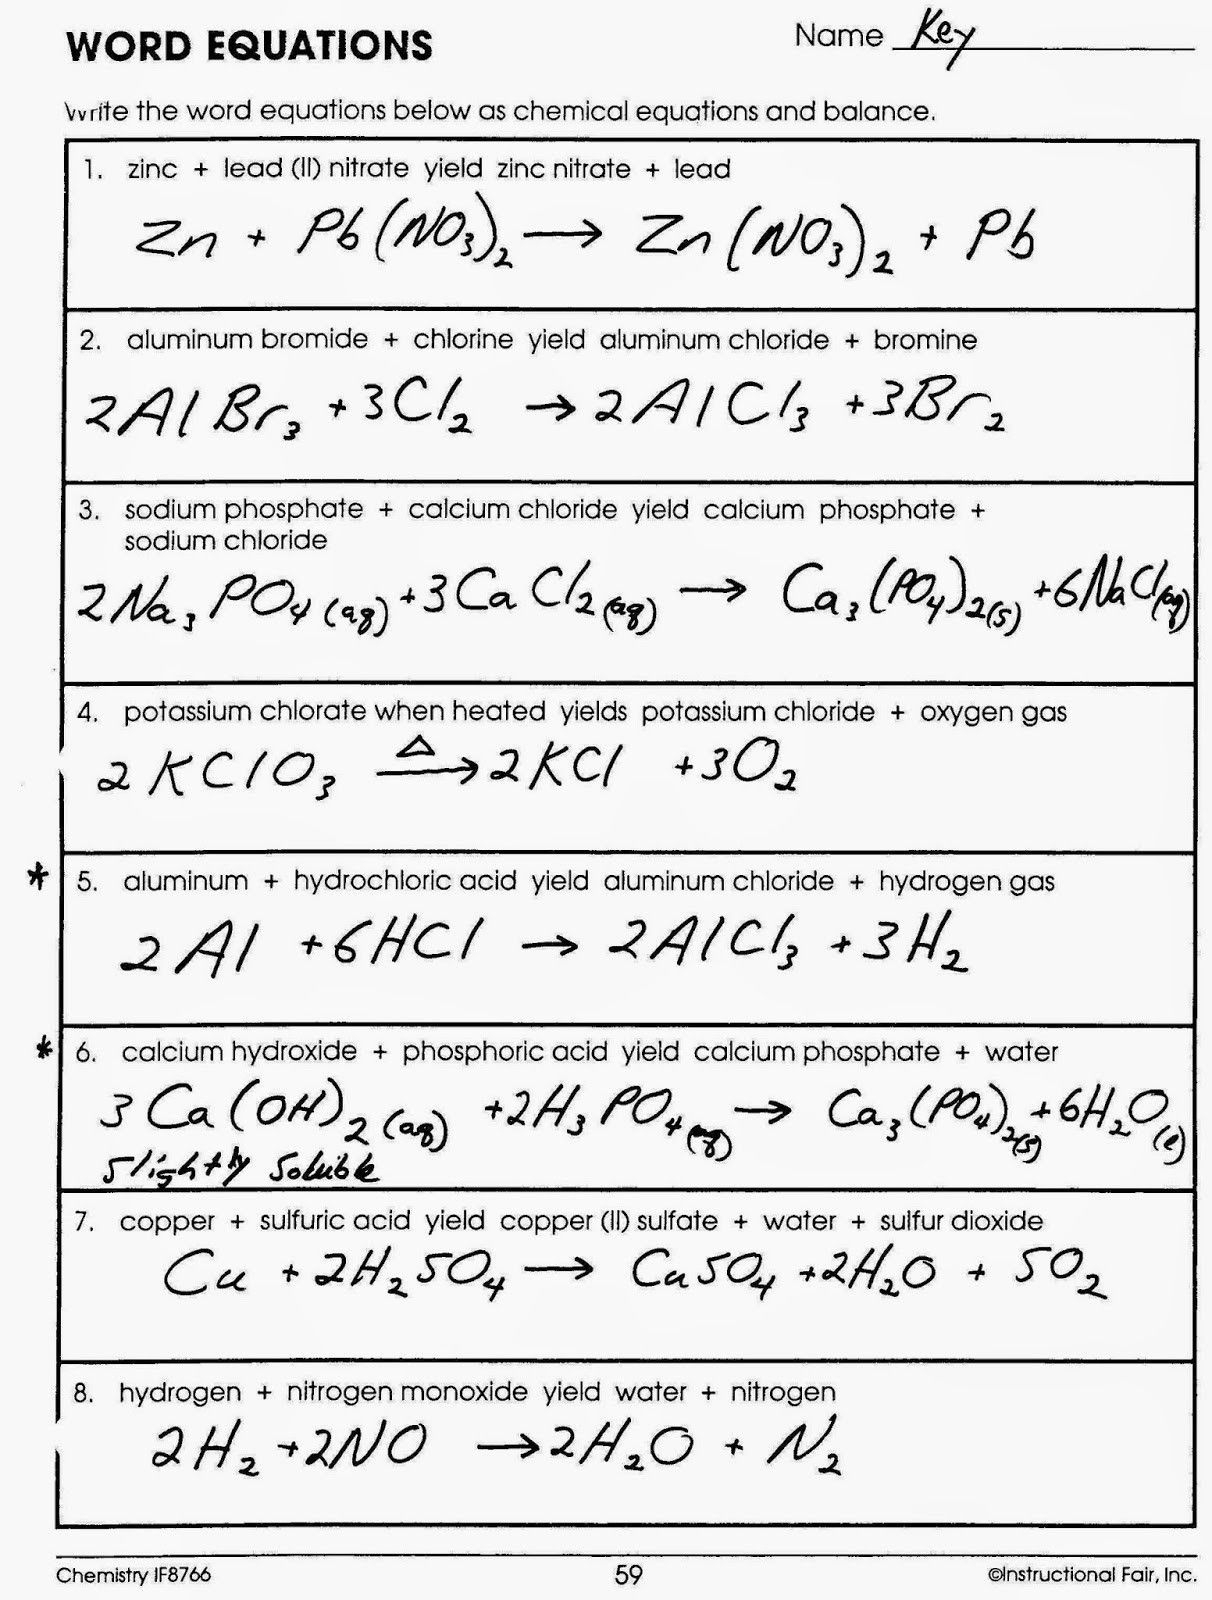 Word Equations Chemistry Worksheet | db-excel.com